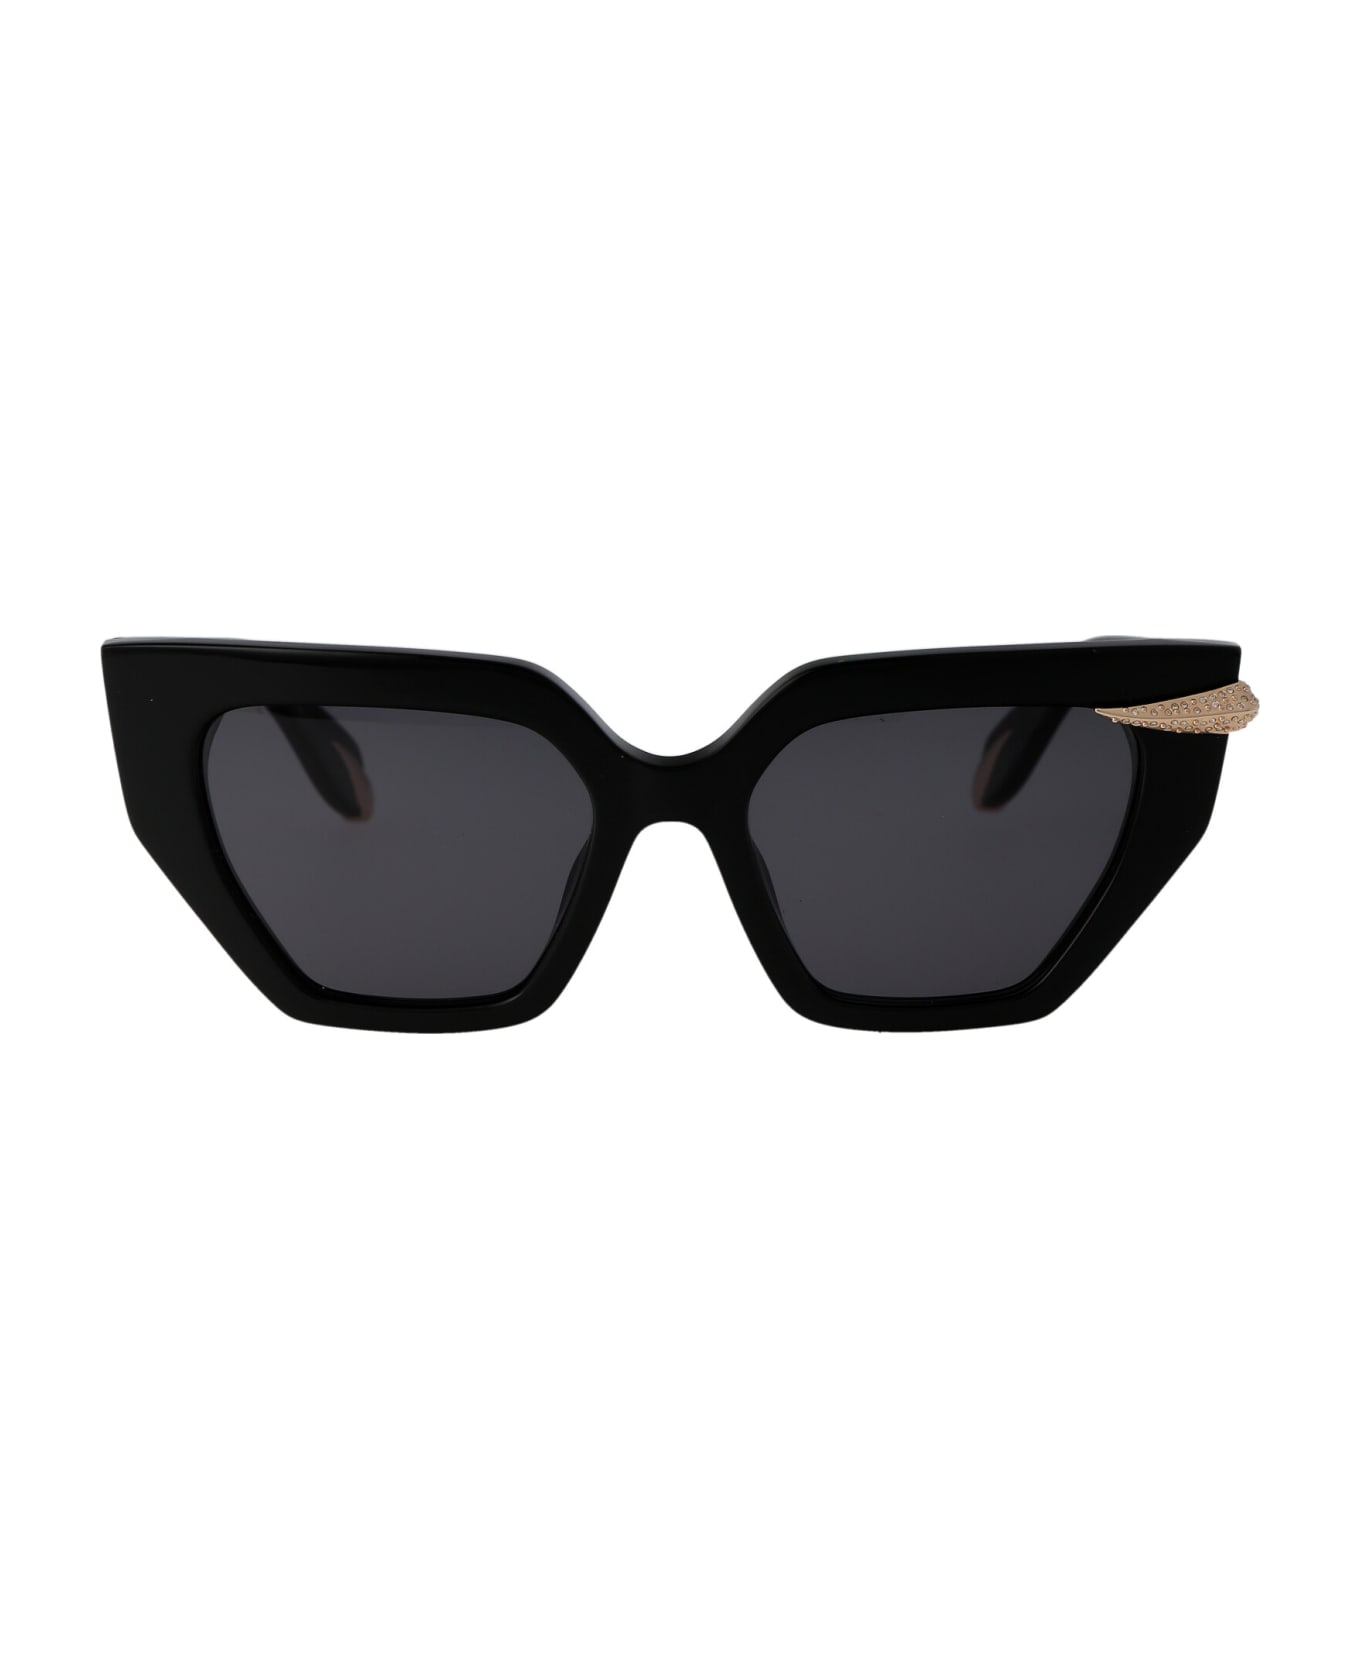 Roberto Cavalli Src001s Sunglasses - 700Y BLACK